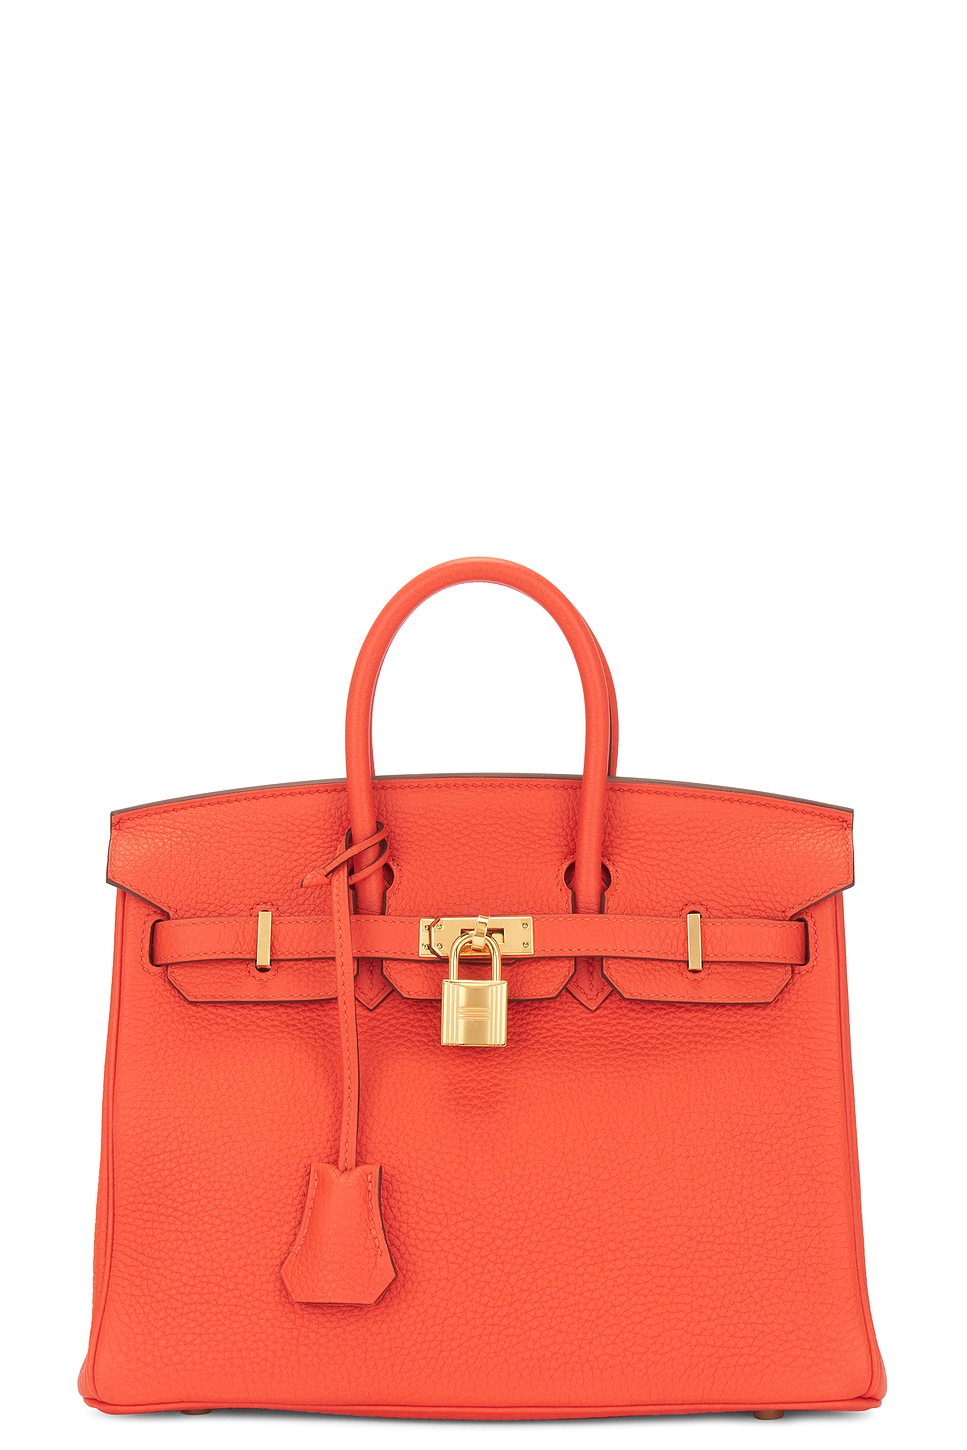 Togo Birkin 25 Handbag in Orange